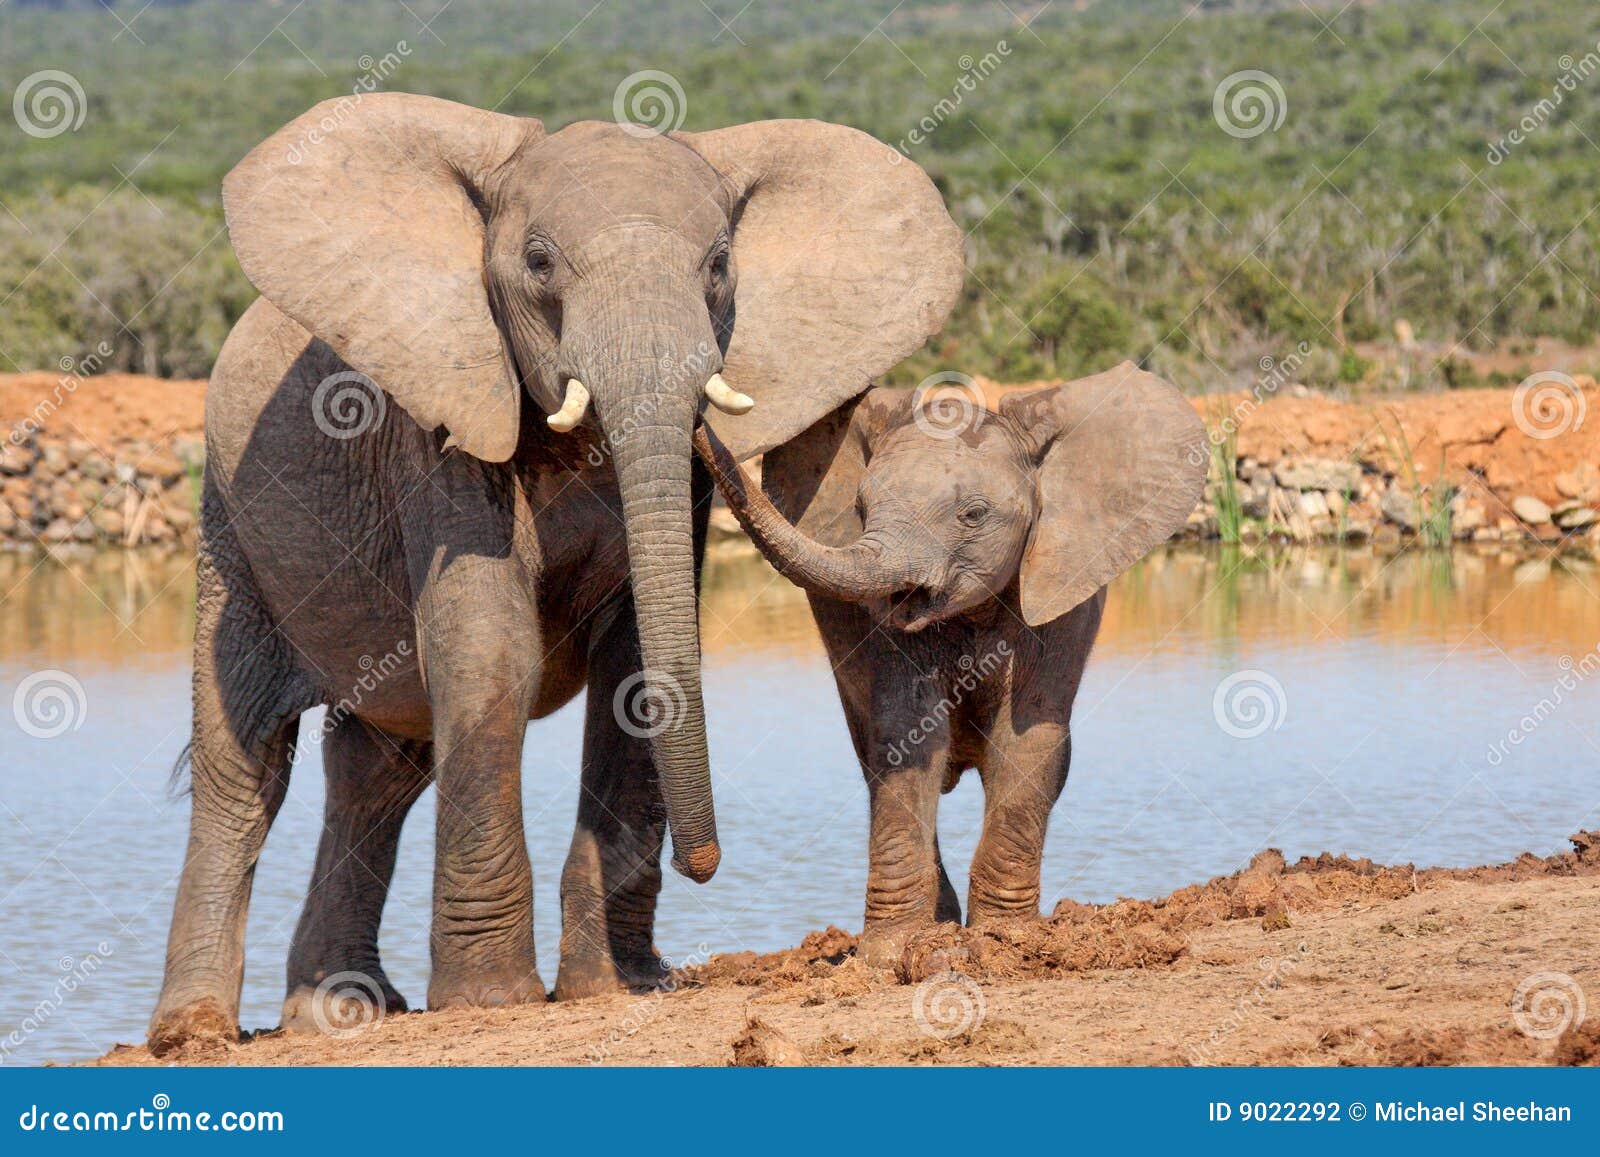 elephant affection